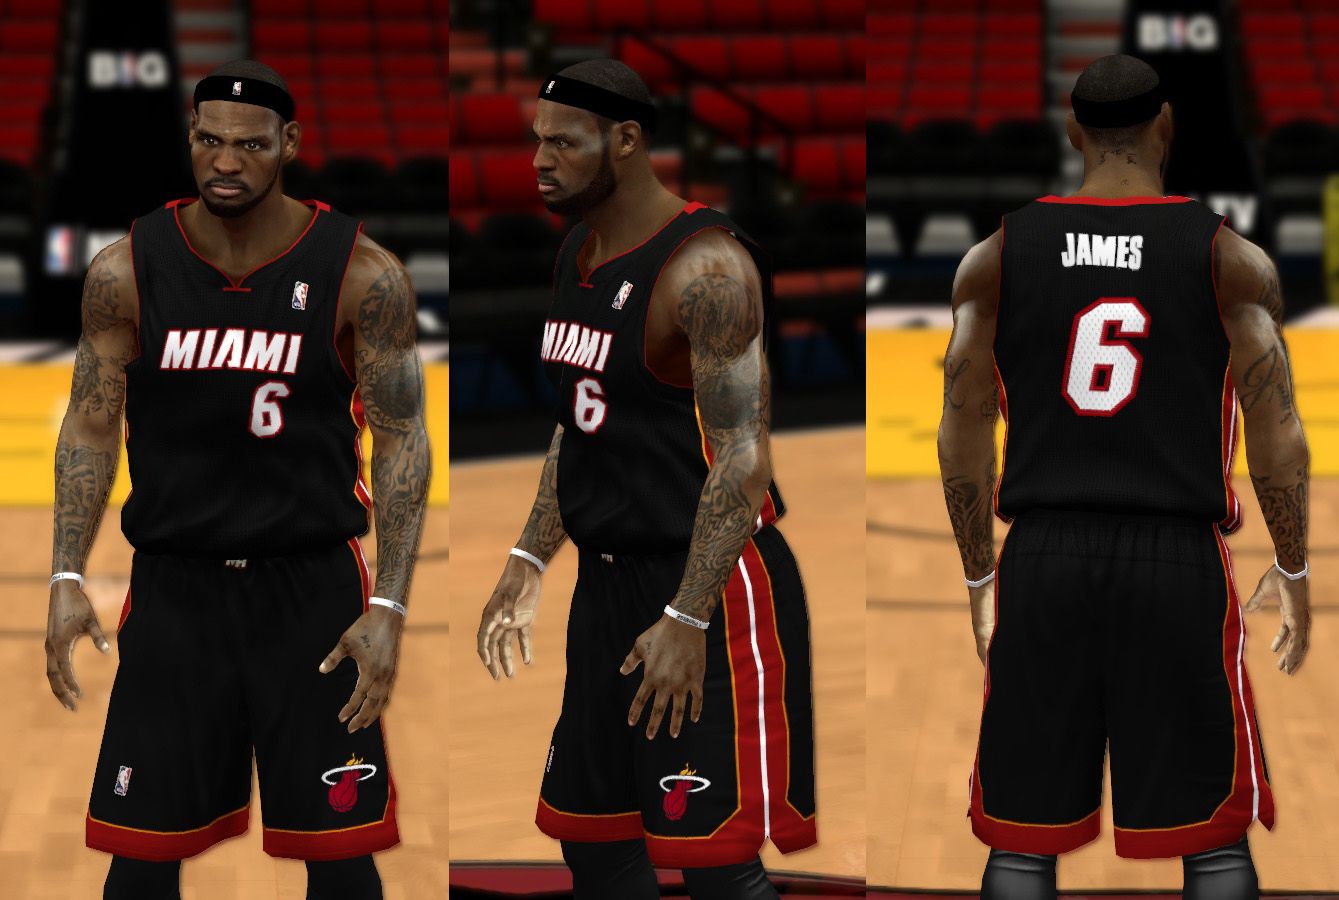 NBA Miami Heat Vice Jersey,NBA 2k14 Miami Heat Jersey,Hassan